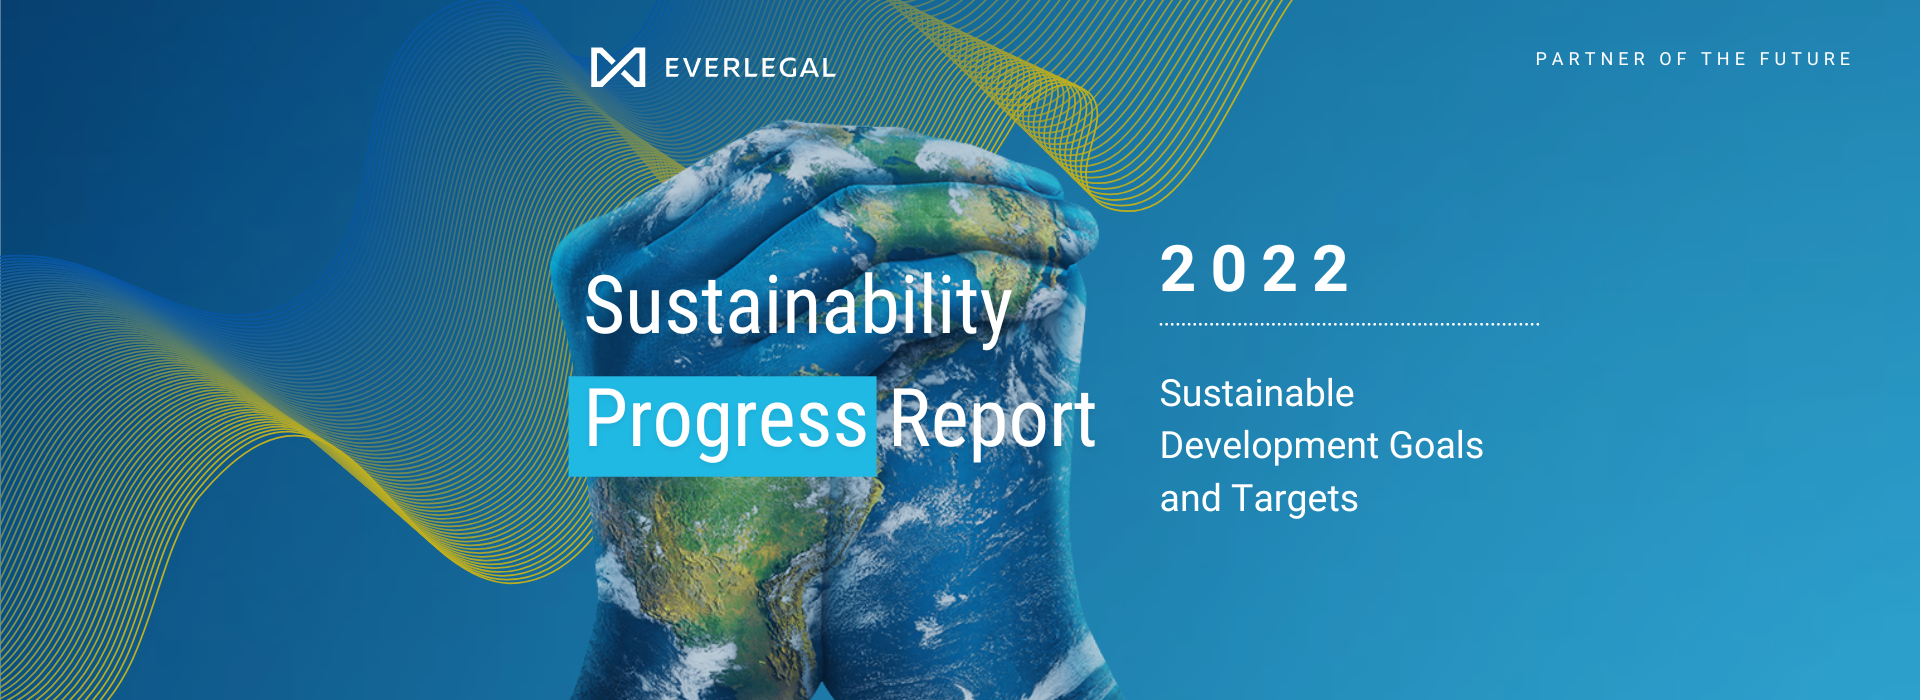 EVERLEGAL Sustainability Progress Report 2022